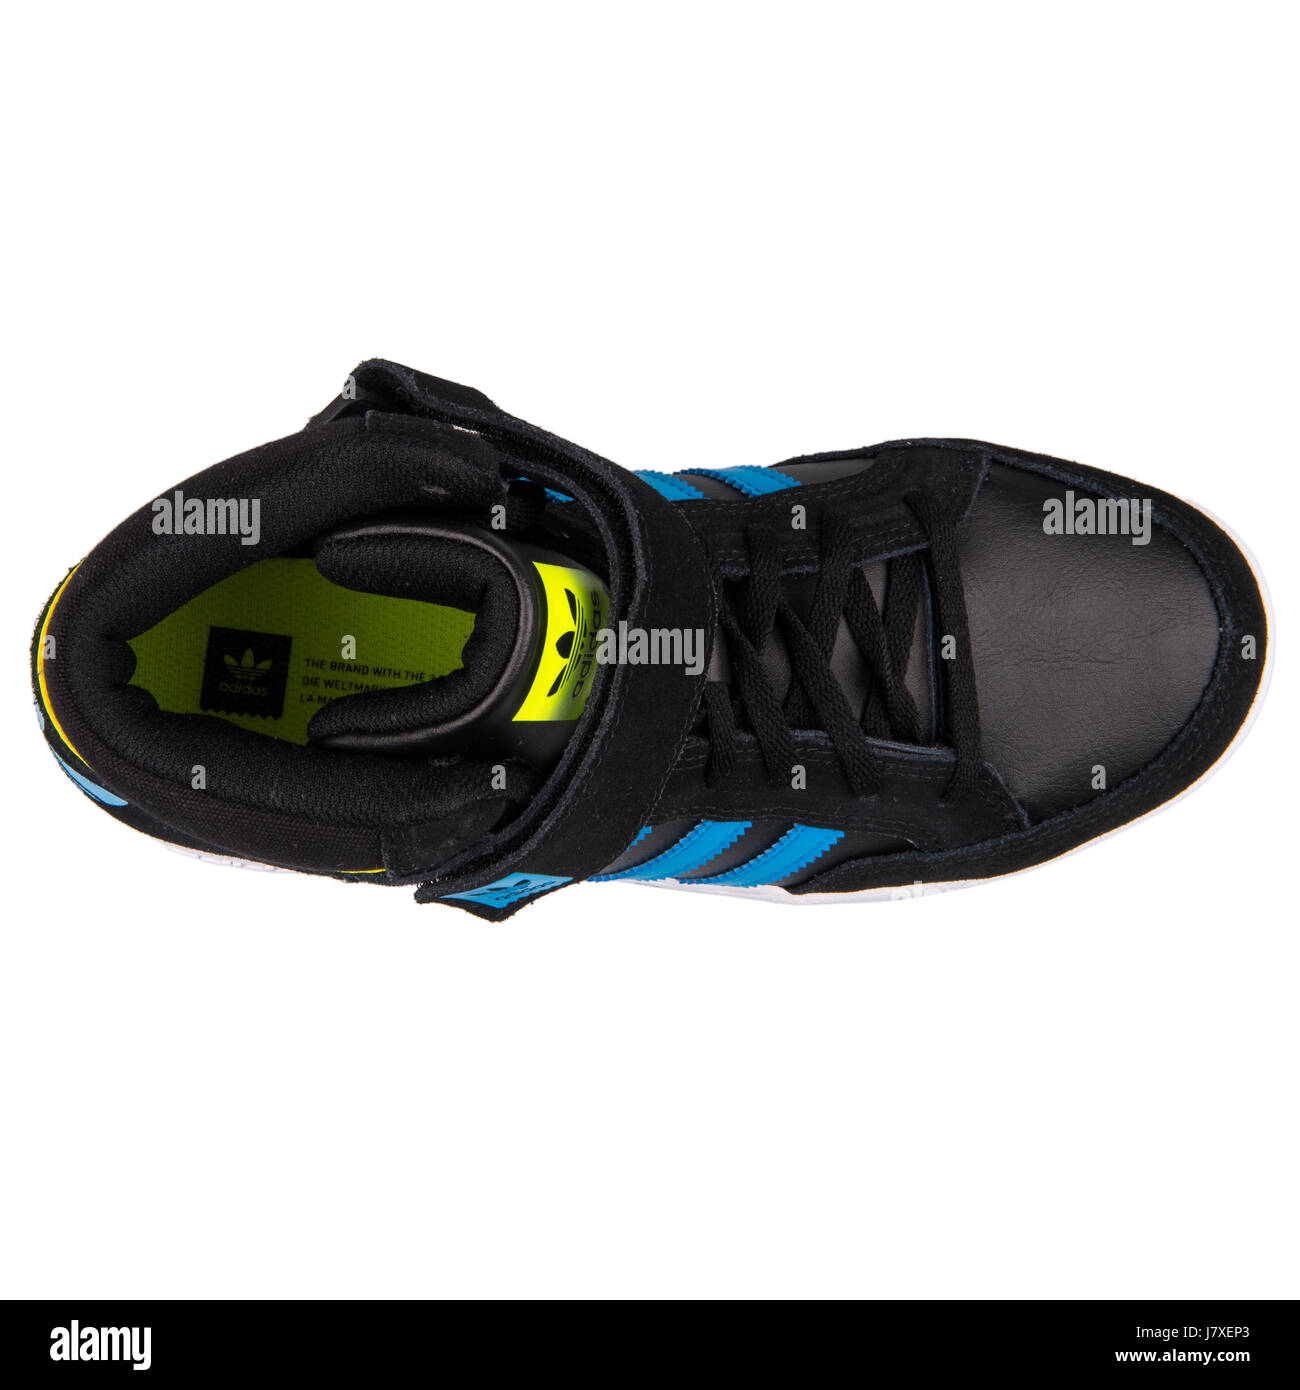 Adidas Varial Mid J Kids Black Sneakers - Q16697 Stock Photo - Alamy